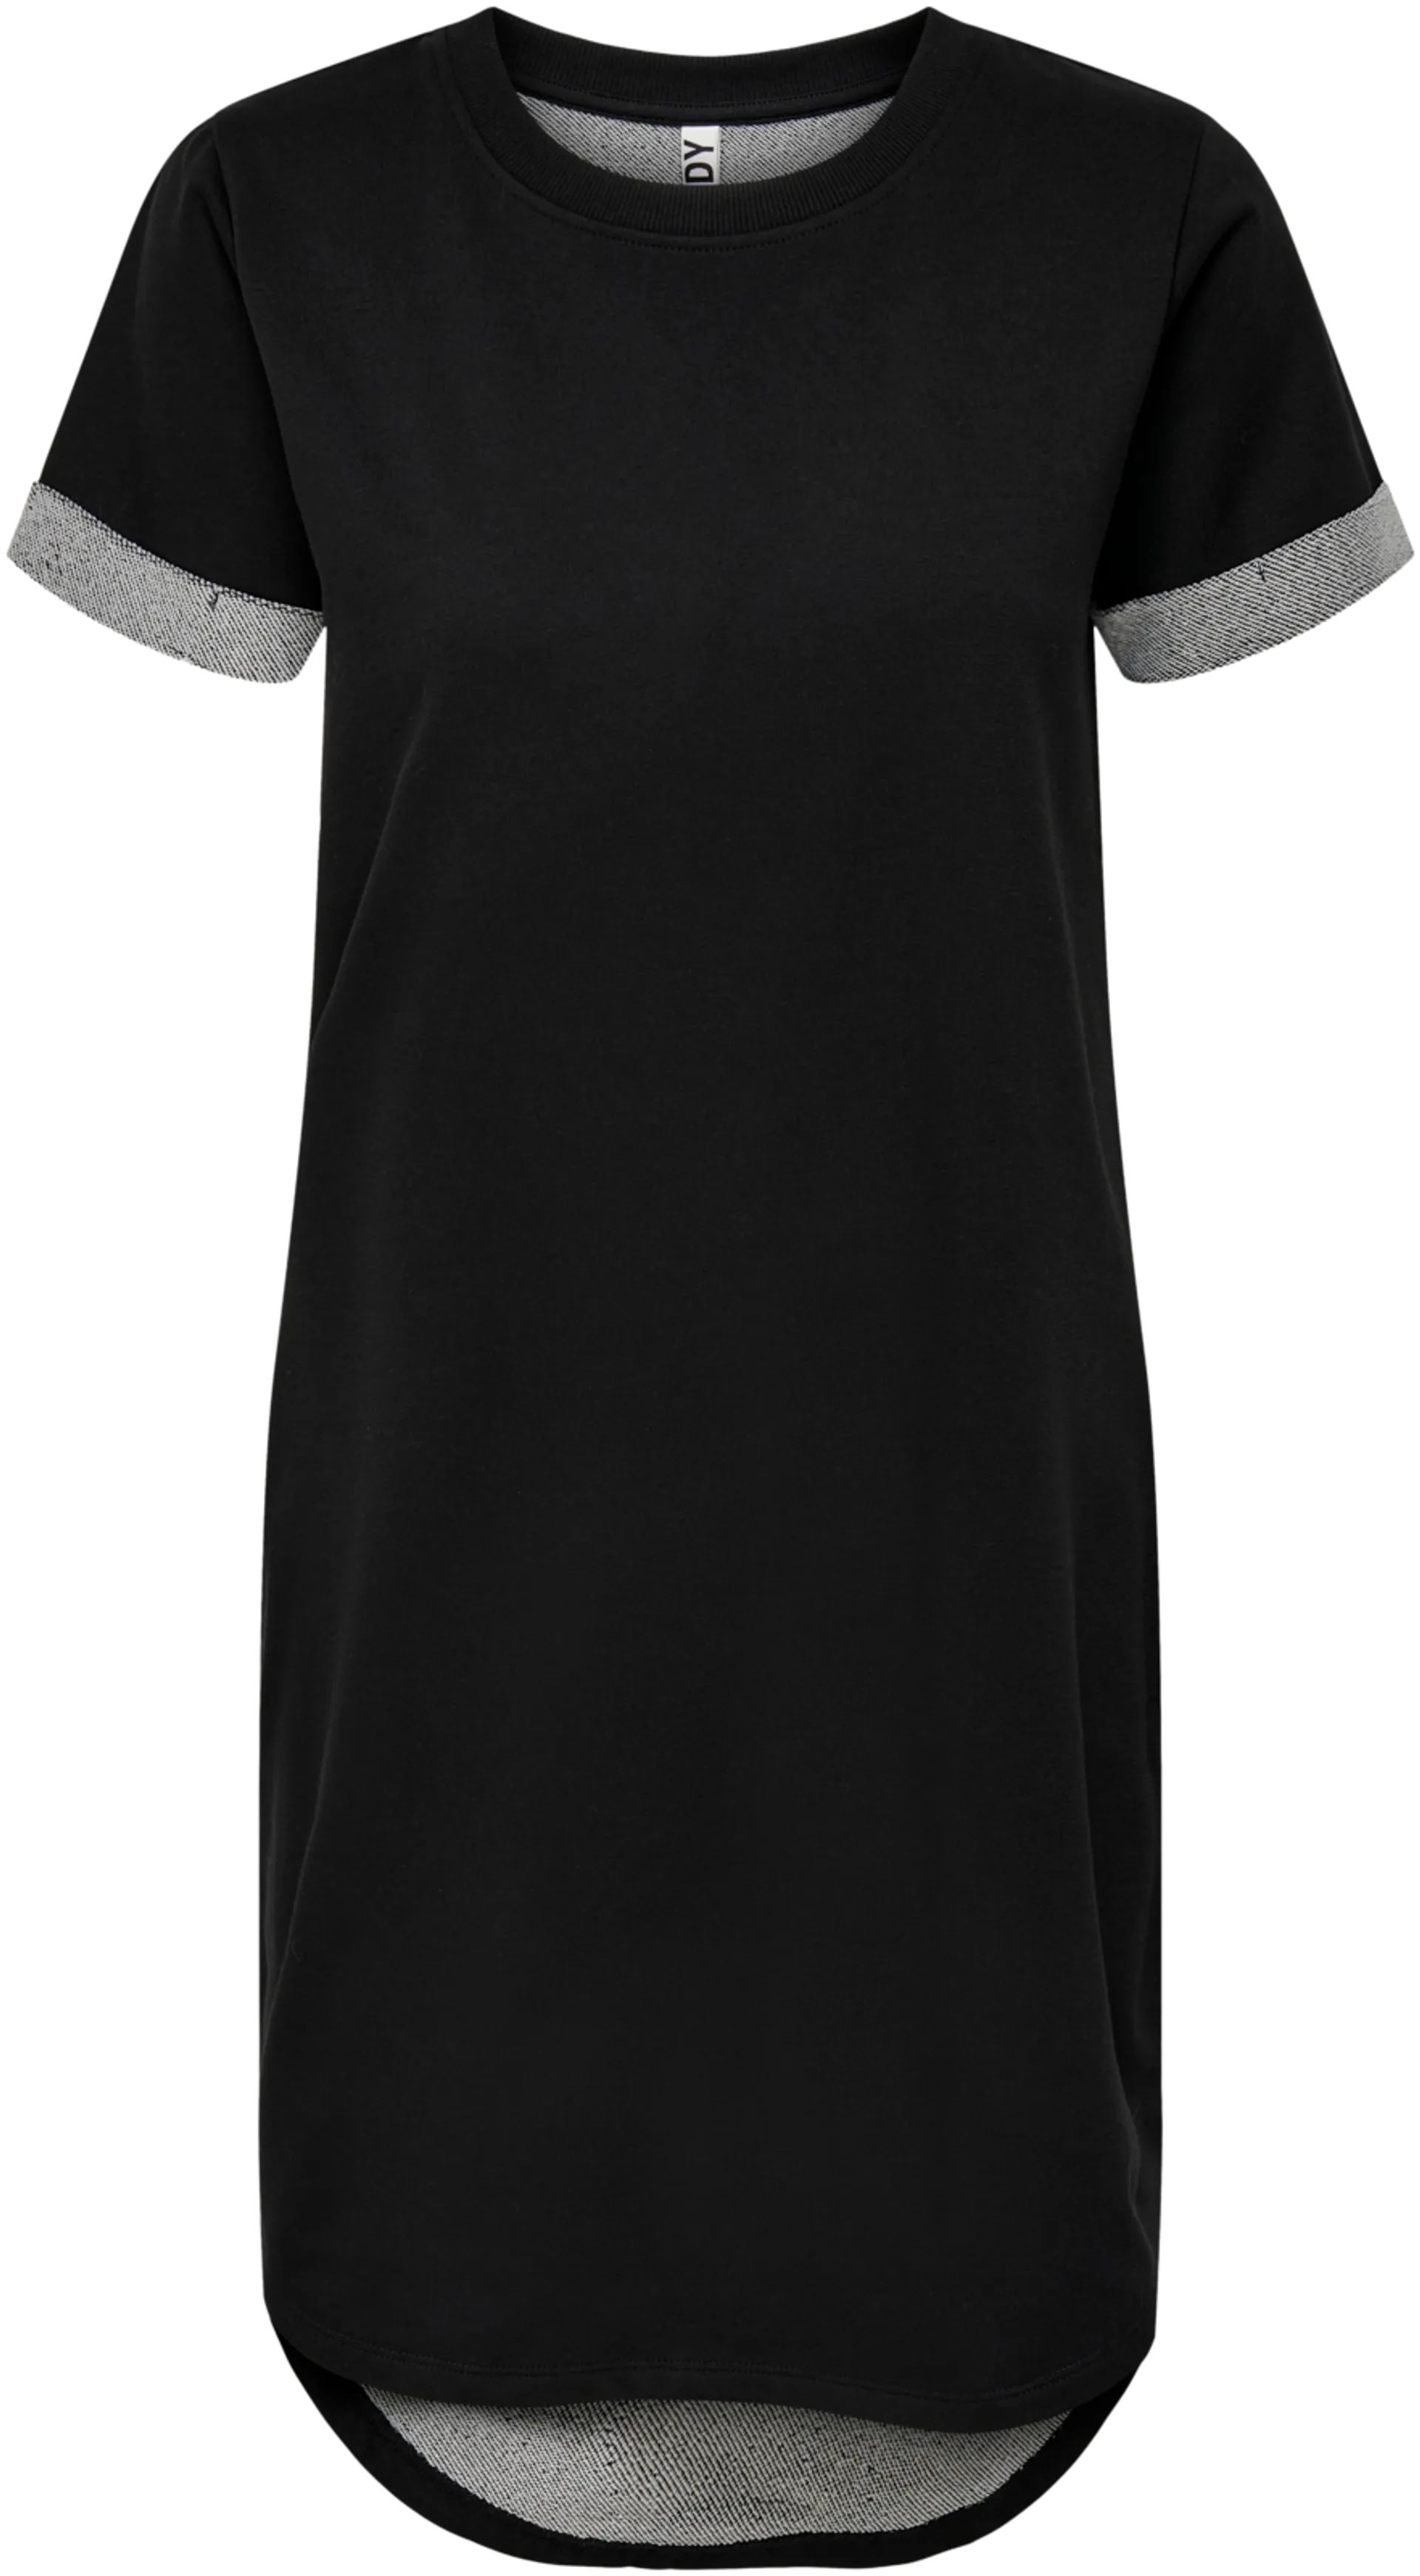 JDY naisten mekko Ivy - BLACK - 1